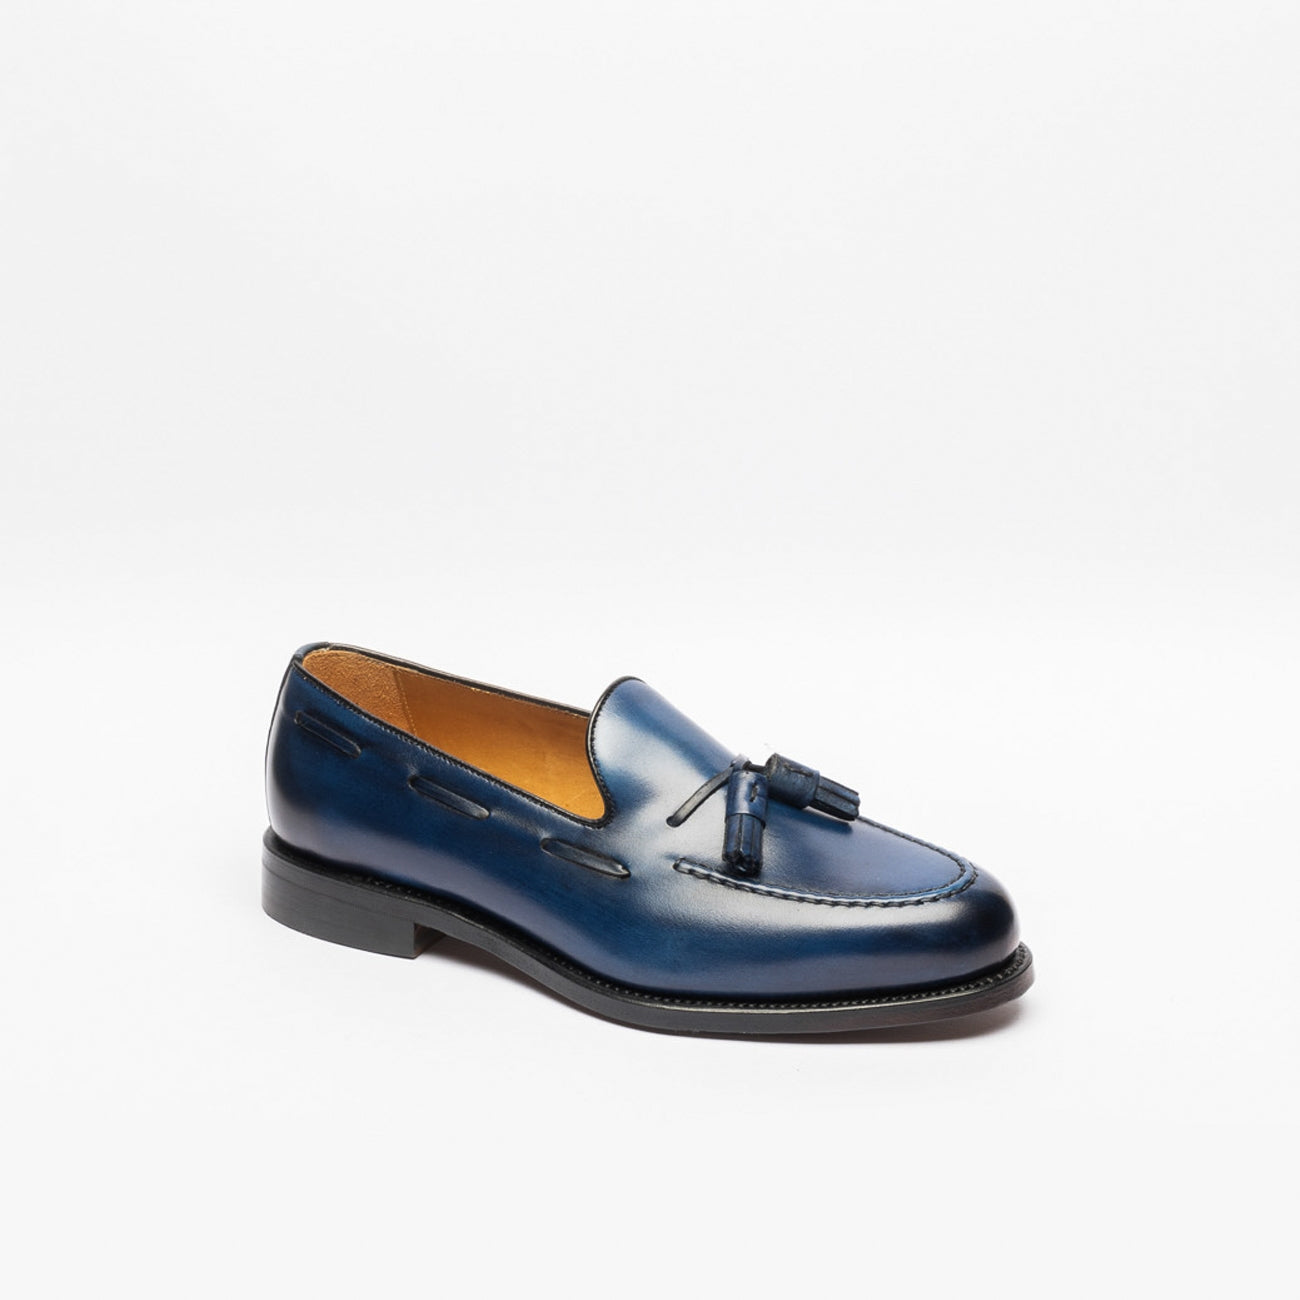 Berwick blue leather tassels loafer